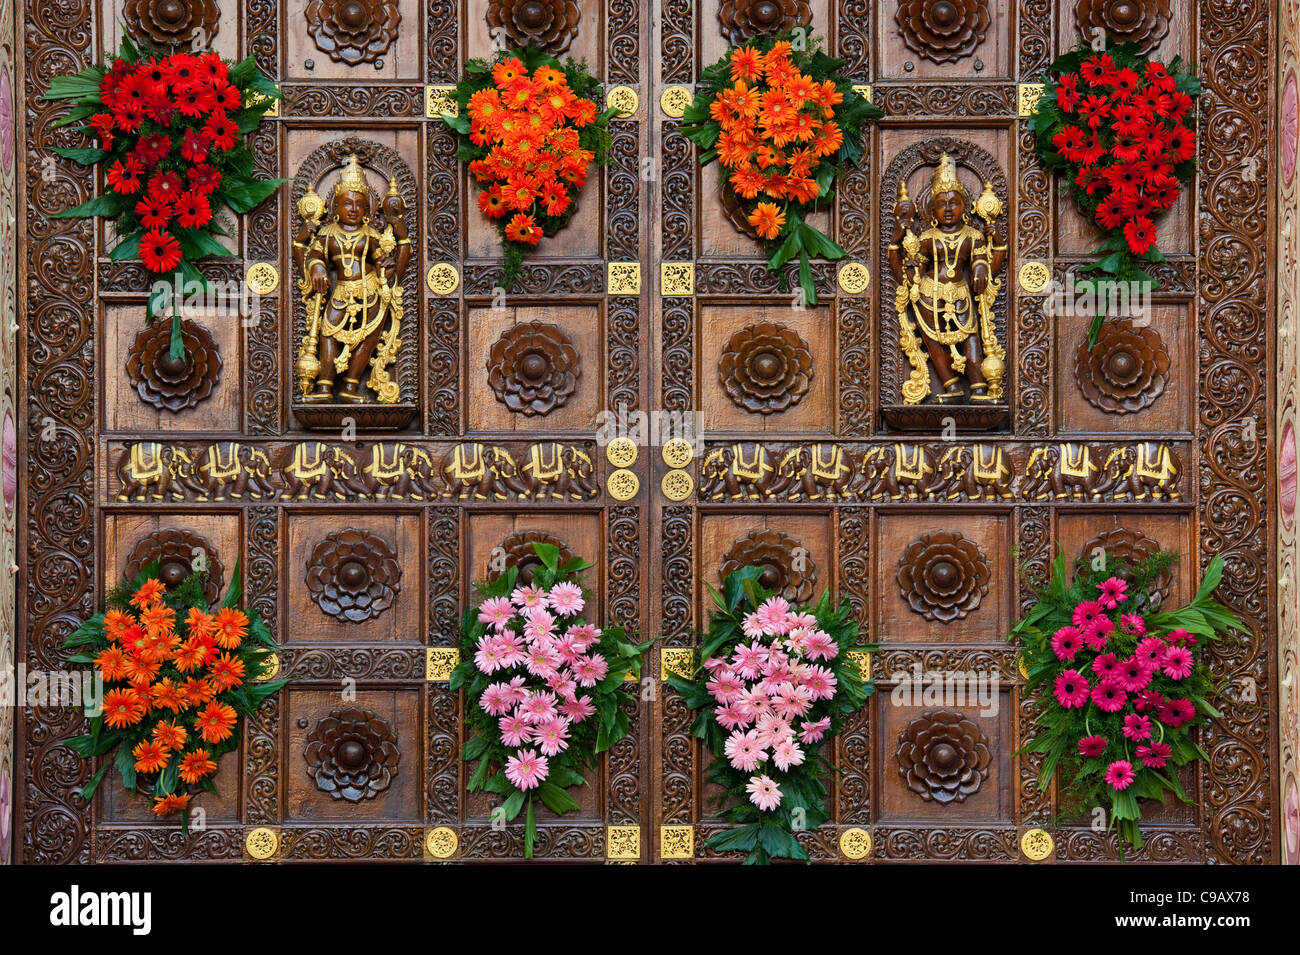 Sathya Sai baba ashram, decorated carved wooden gopuram gates. Puttaparthi, Andhra Pradesh, India Stock Photo